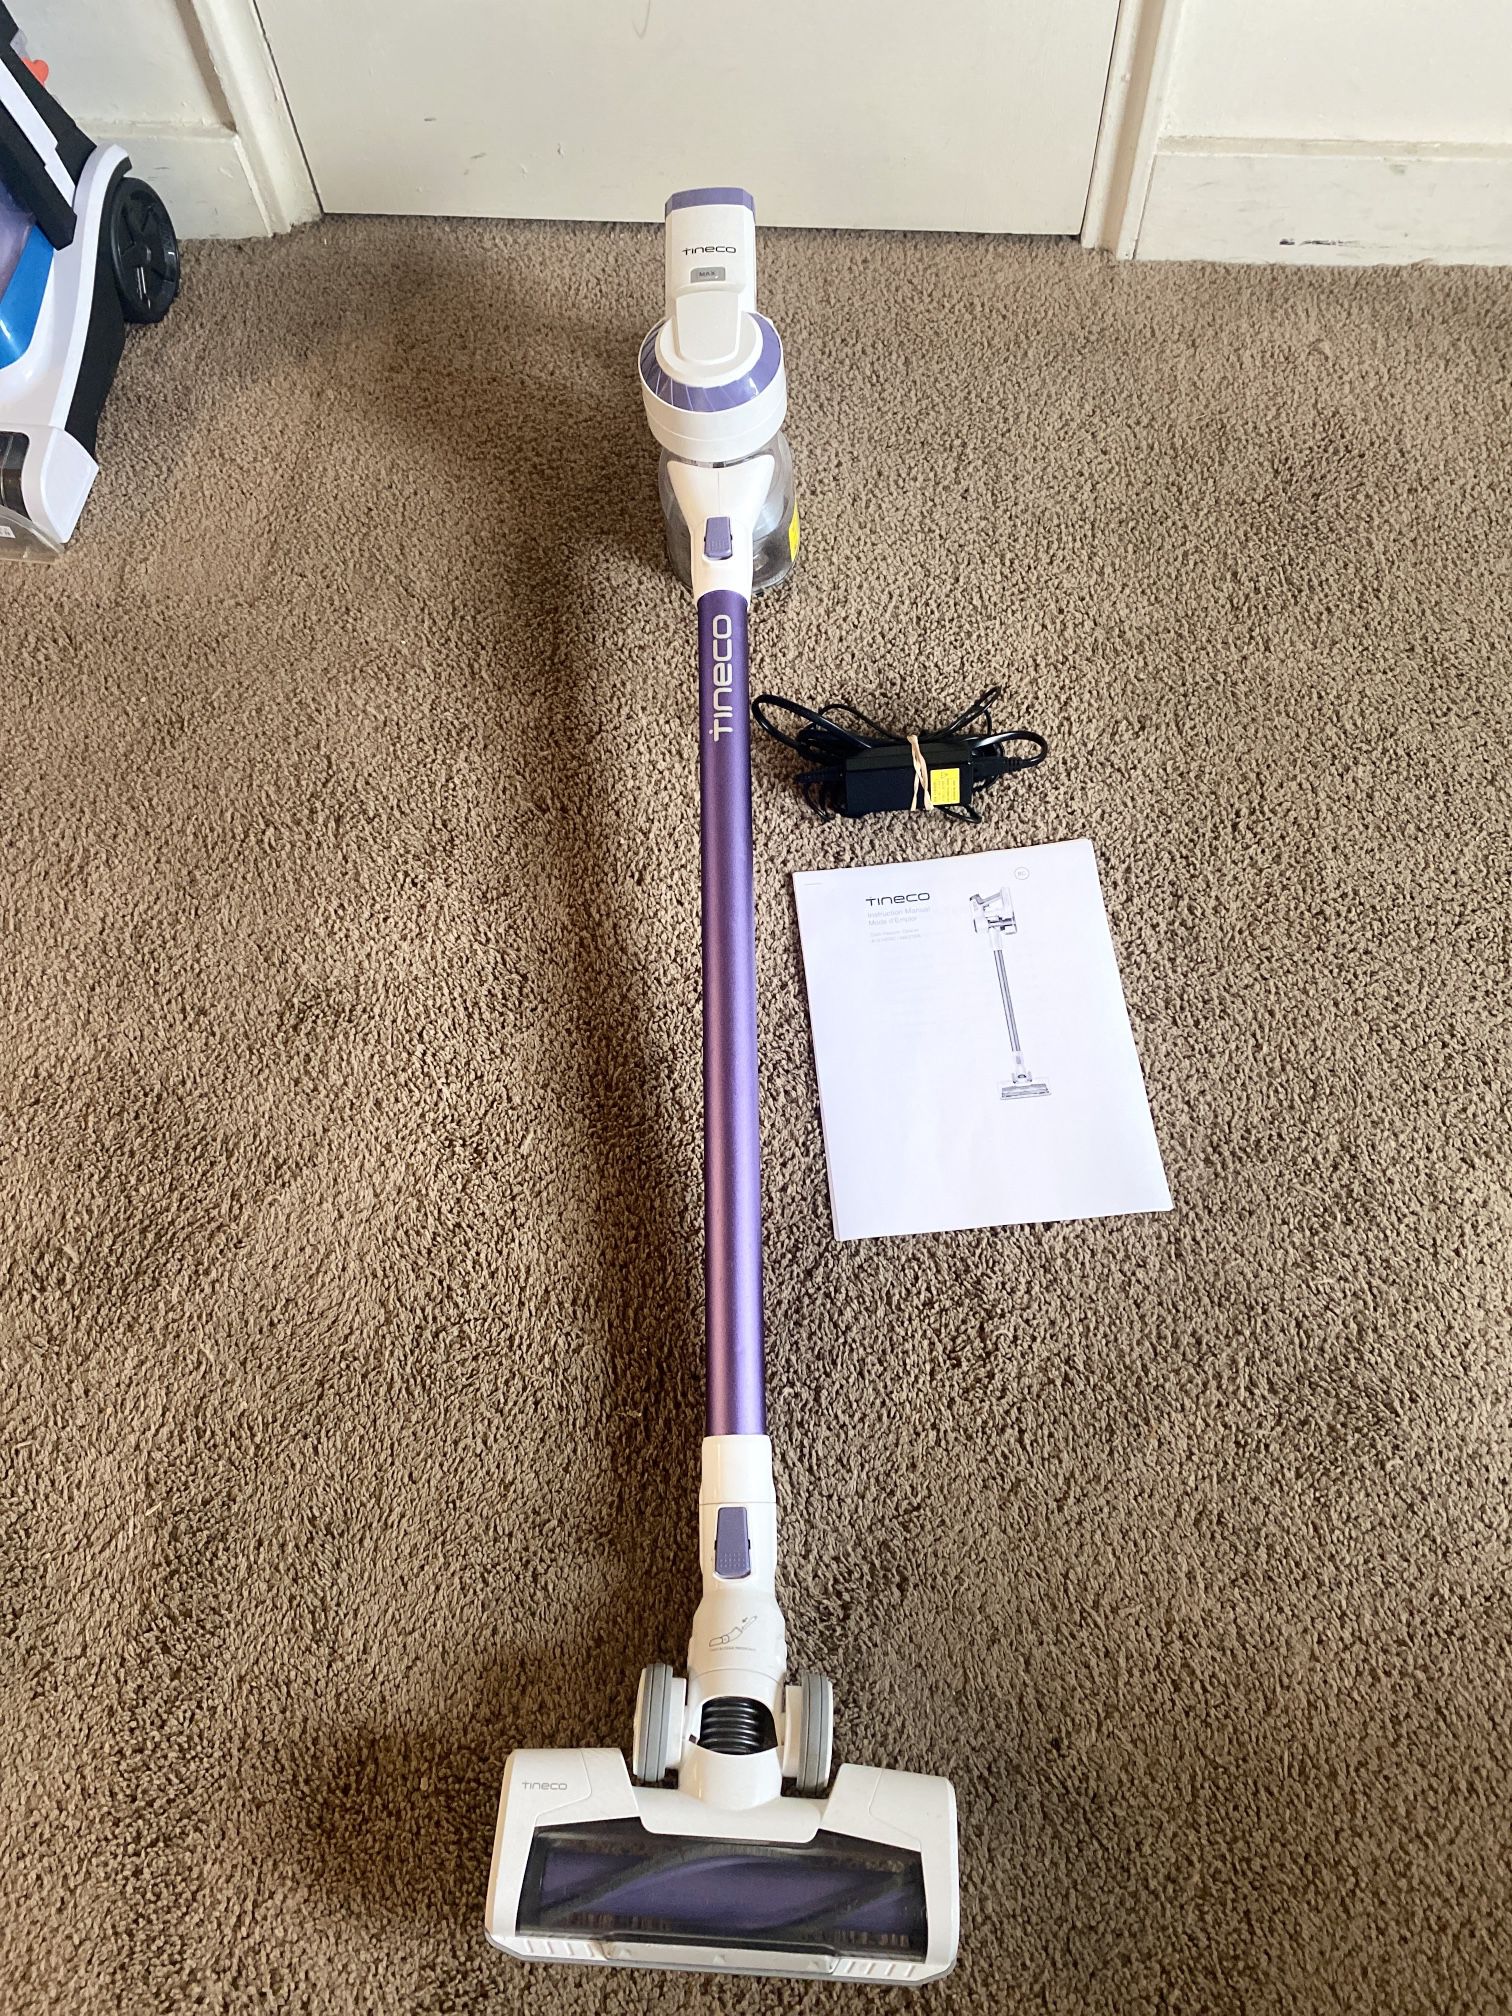 Tineco A10 Cordless Stick Vacuum